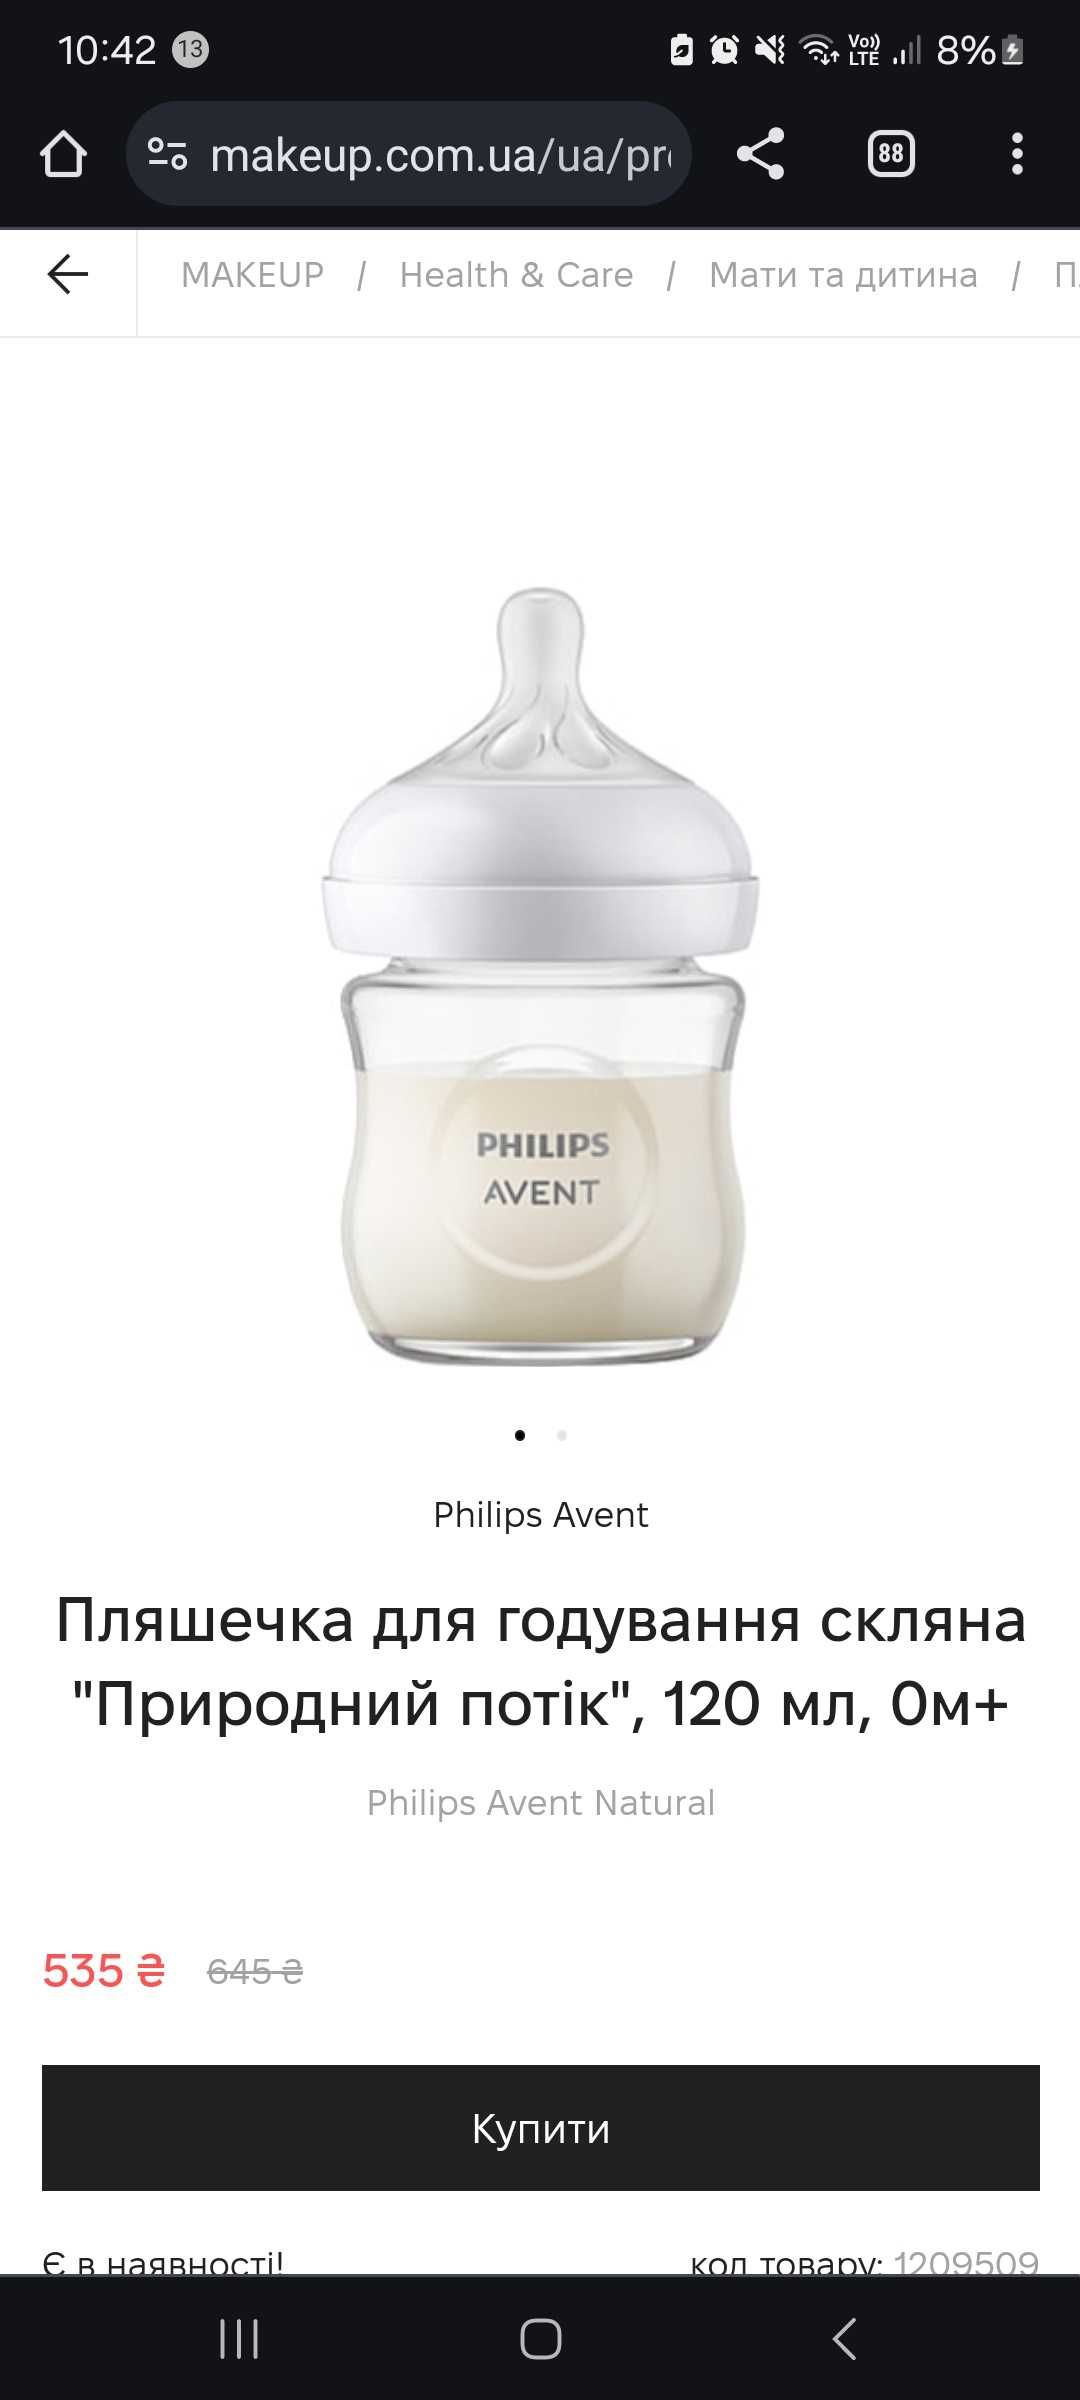 Philips Avent 120ml скляна